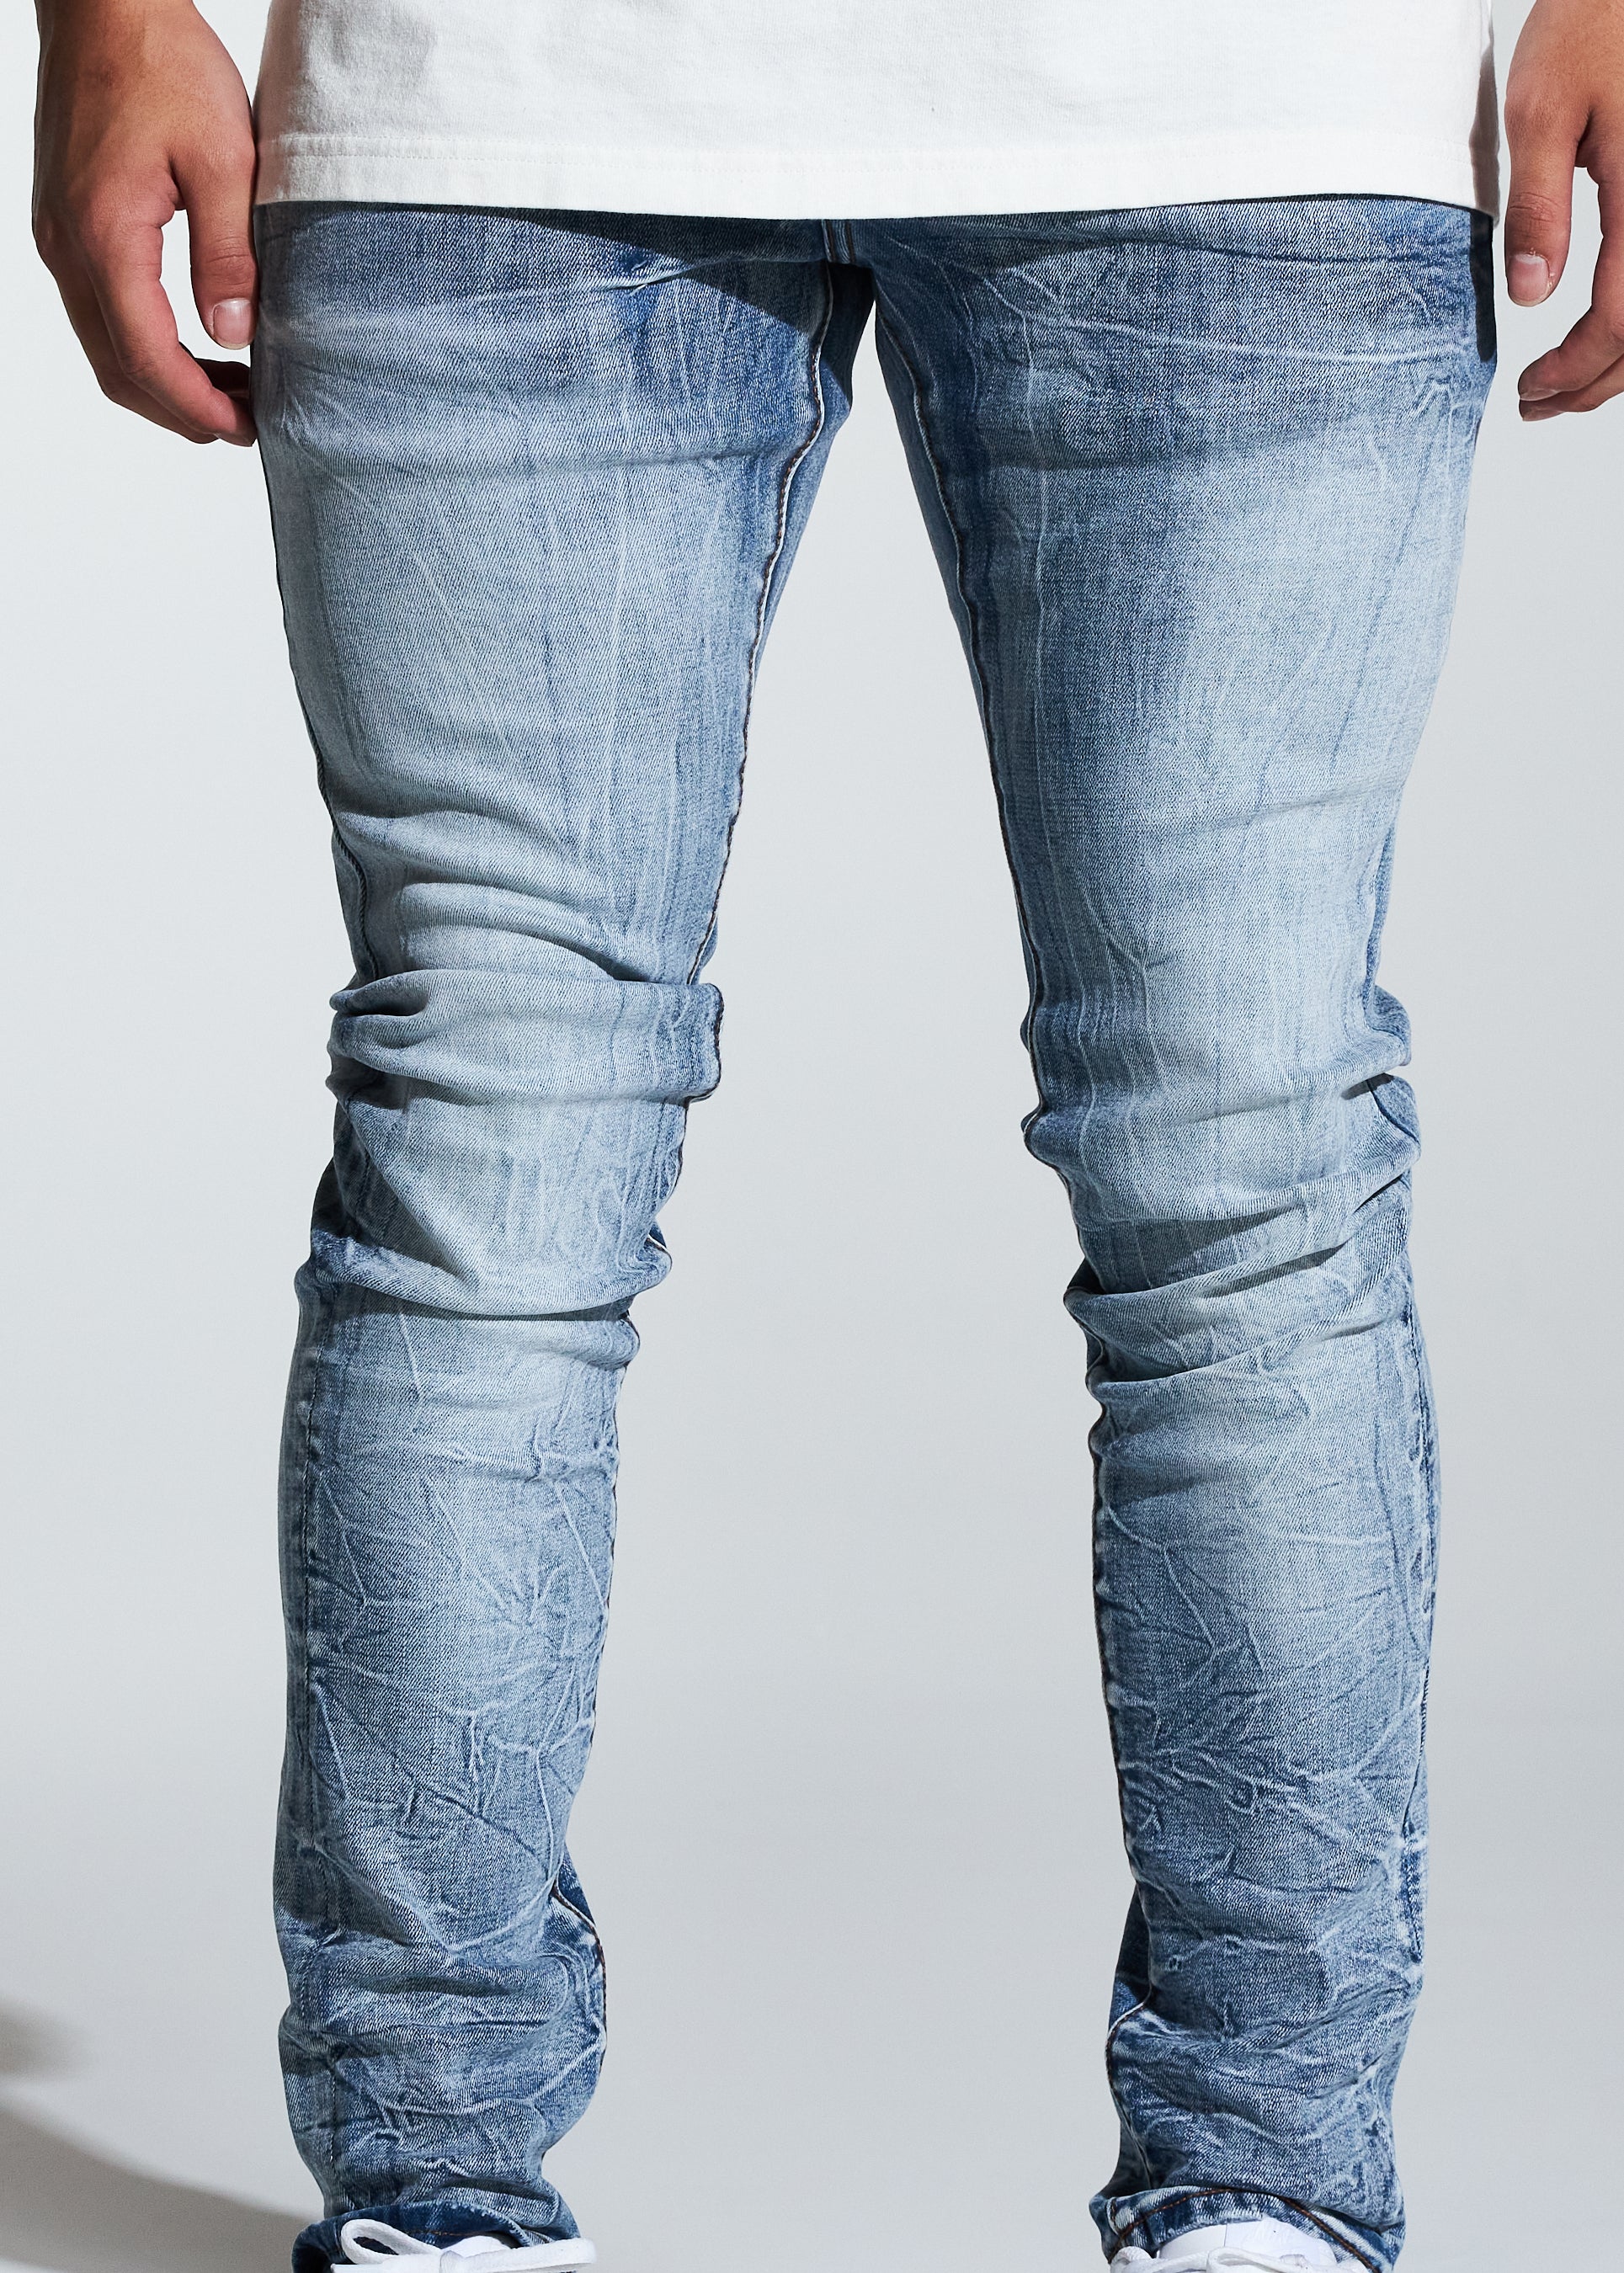 Crysp Denim | Men's Jeans, Denim Jackets & Clothing